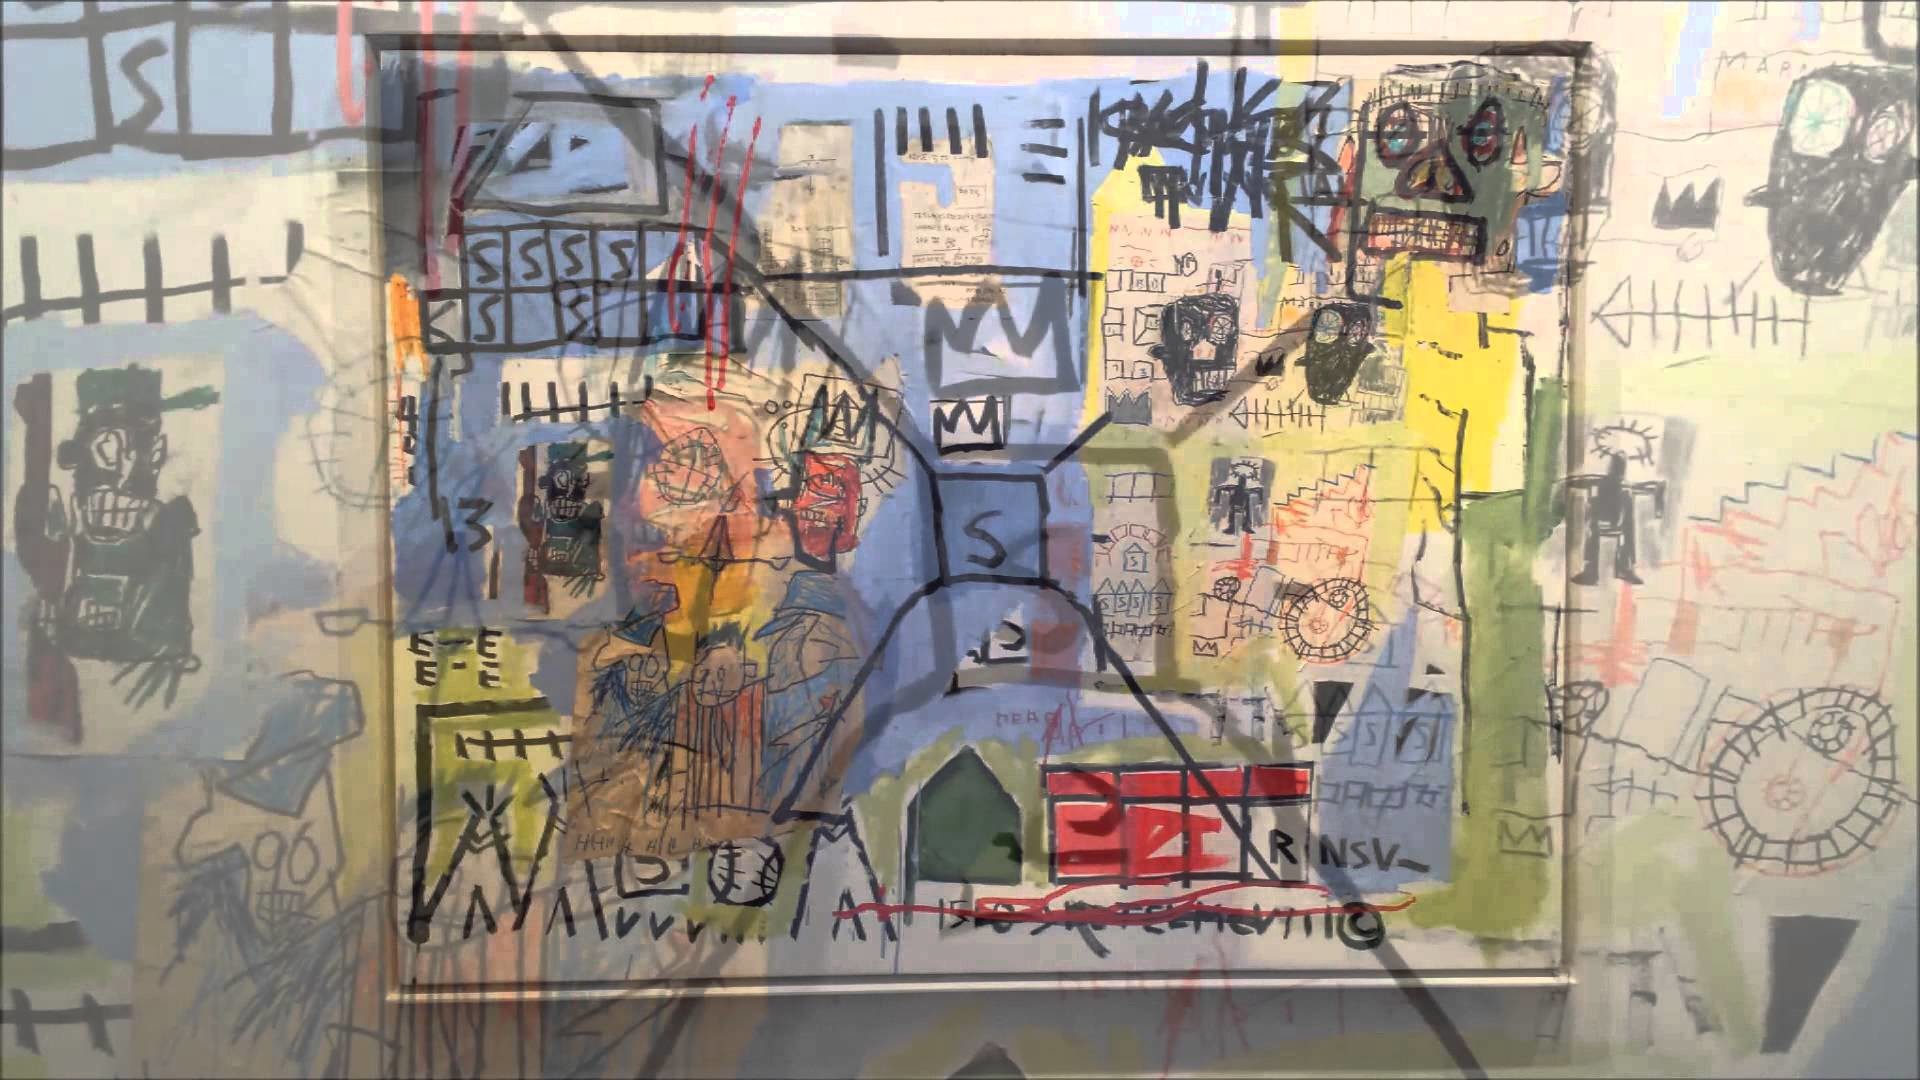 1920x1080 Comparison between Haring and Basquiat (Christian Munoz)